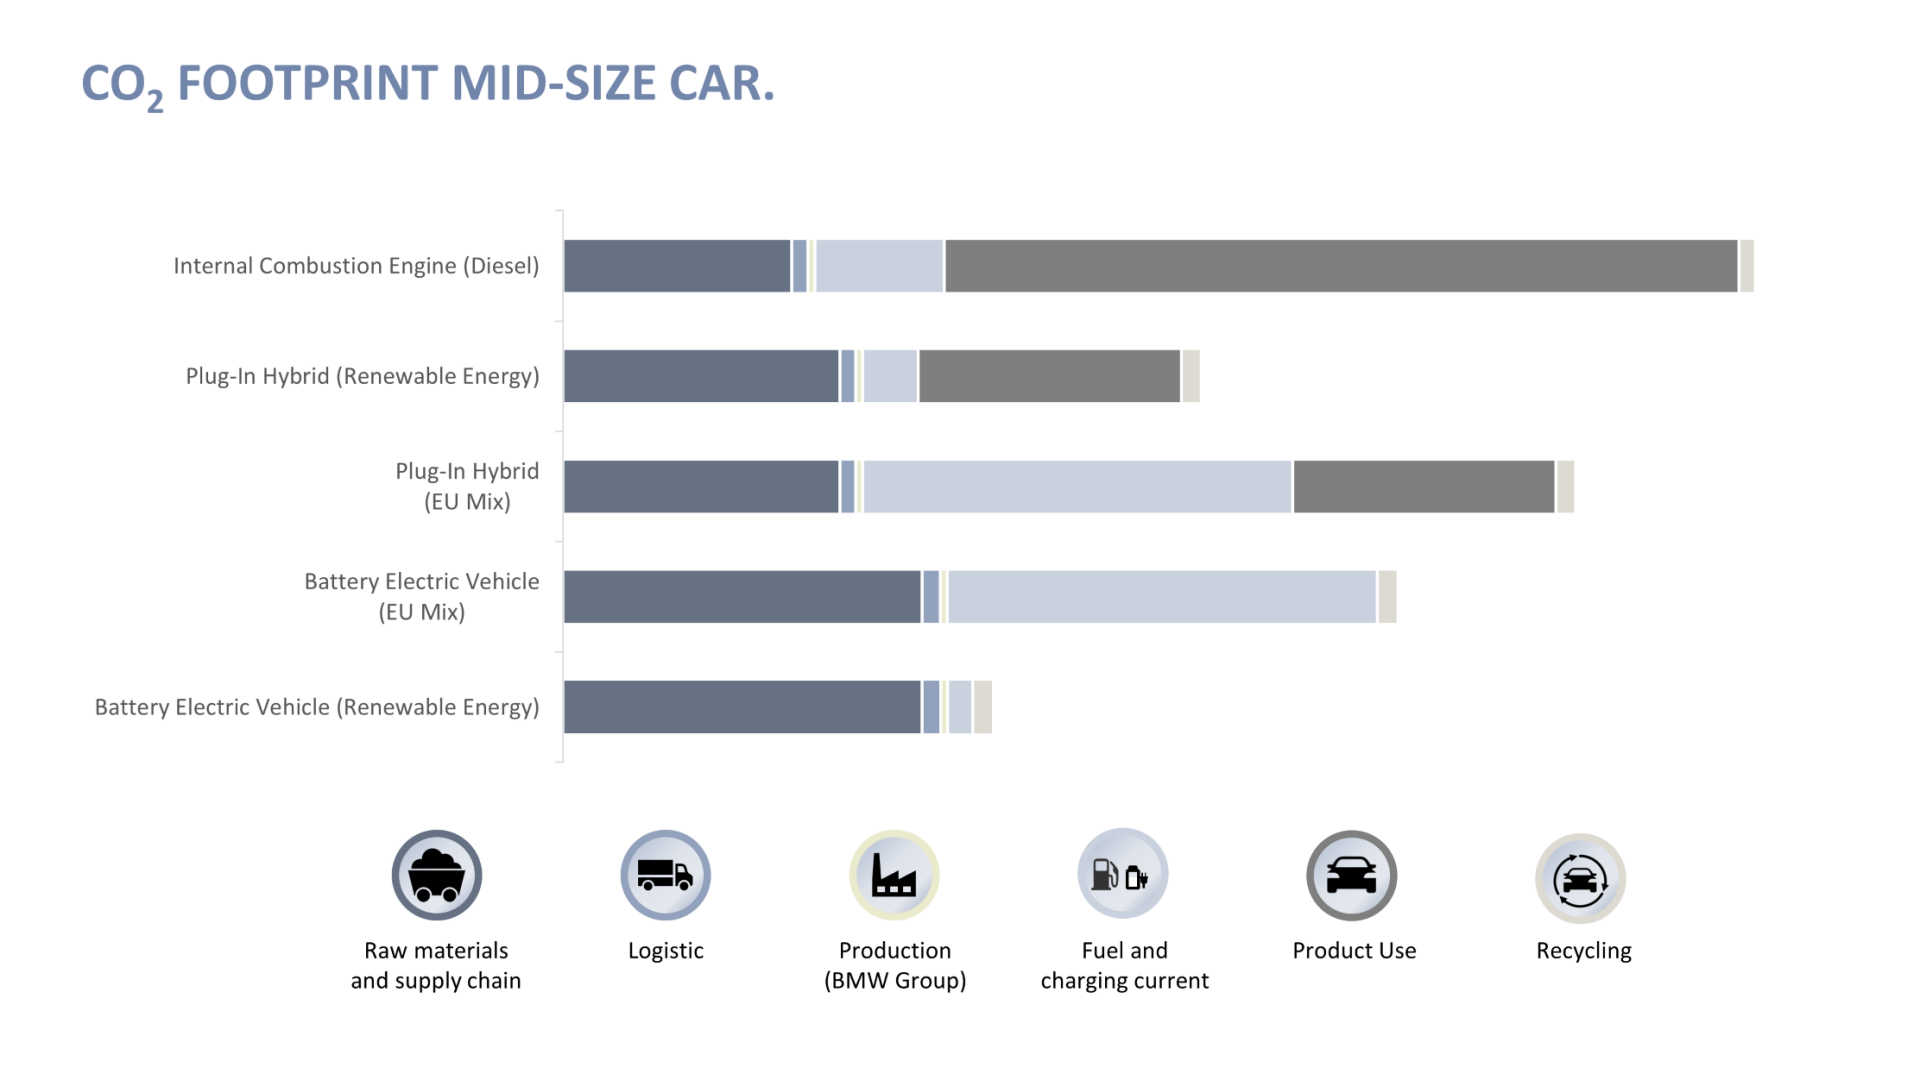 Grafik CO2-Footprint Mittelklassefahrzeug